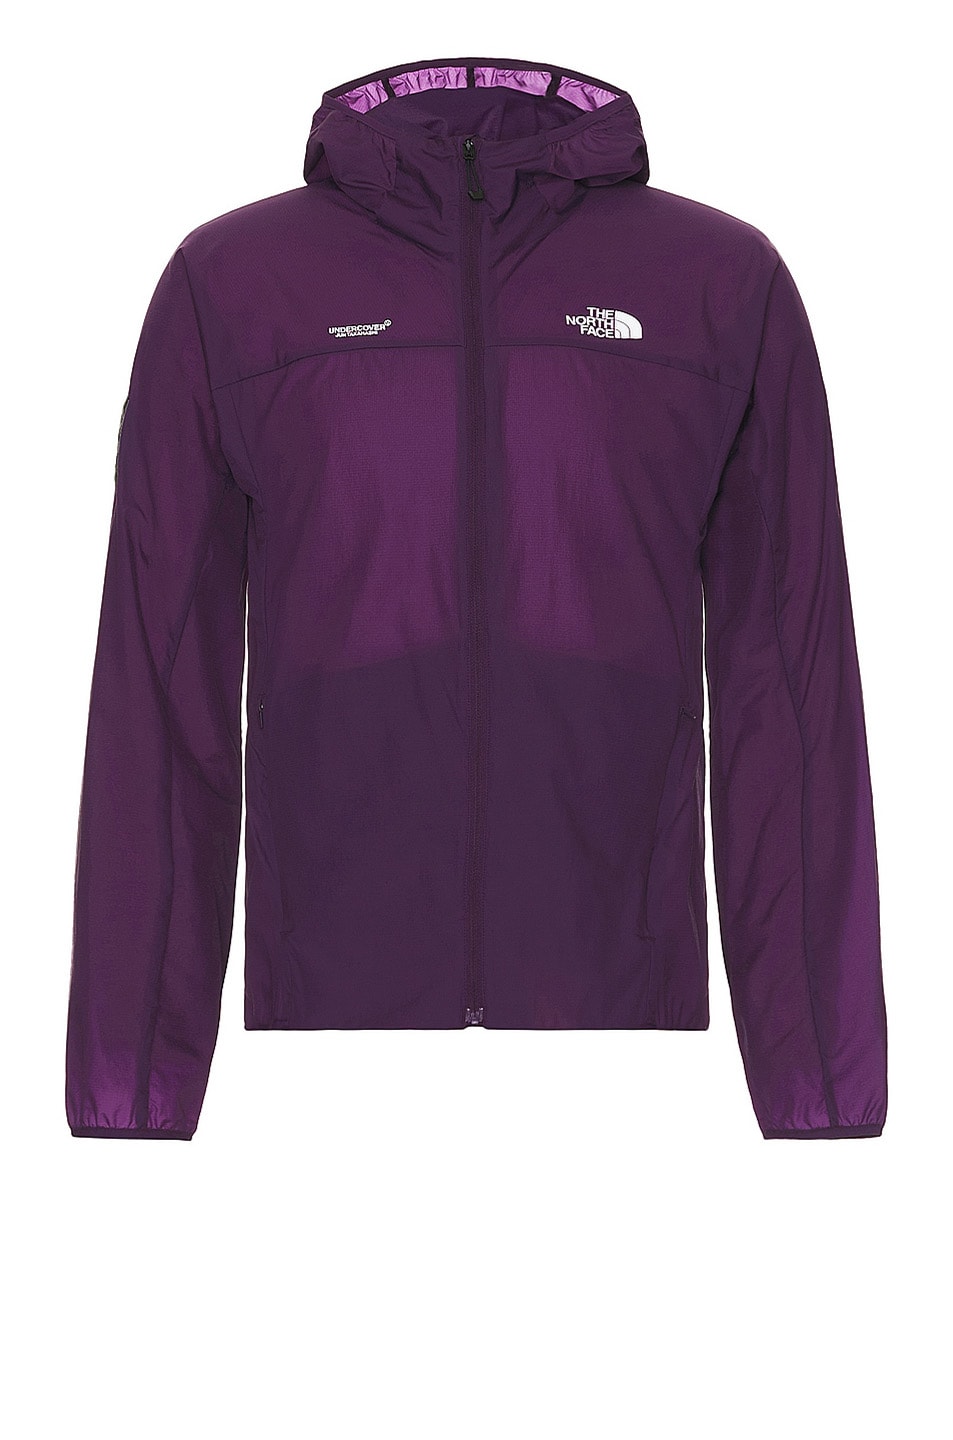 Soukuu Trail Run Packable Wind Jacket in Purple Pennat.